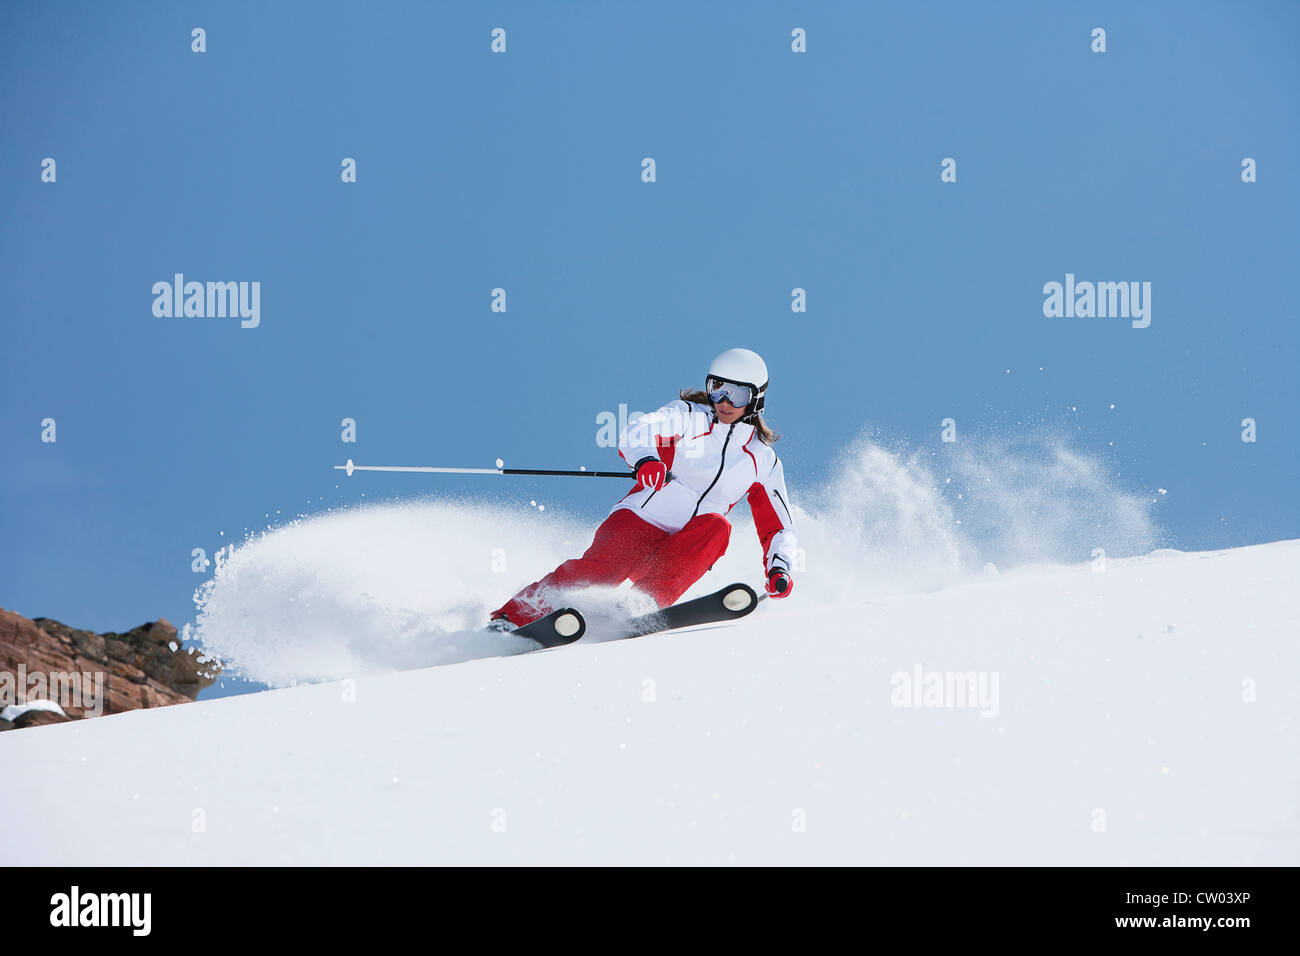 Skier coasting on snowy slope Stock Photo